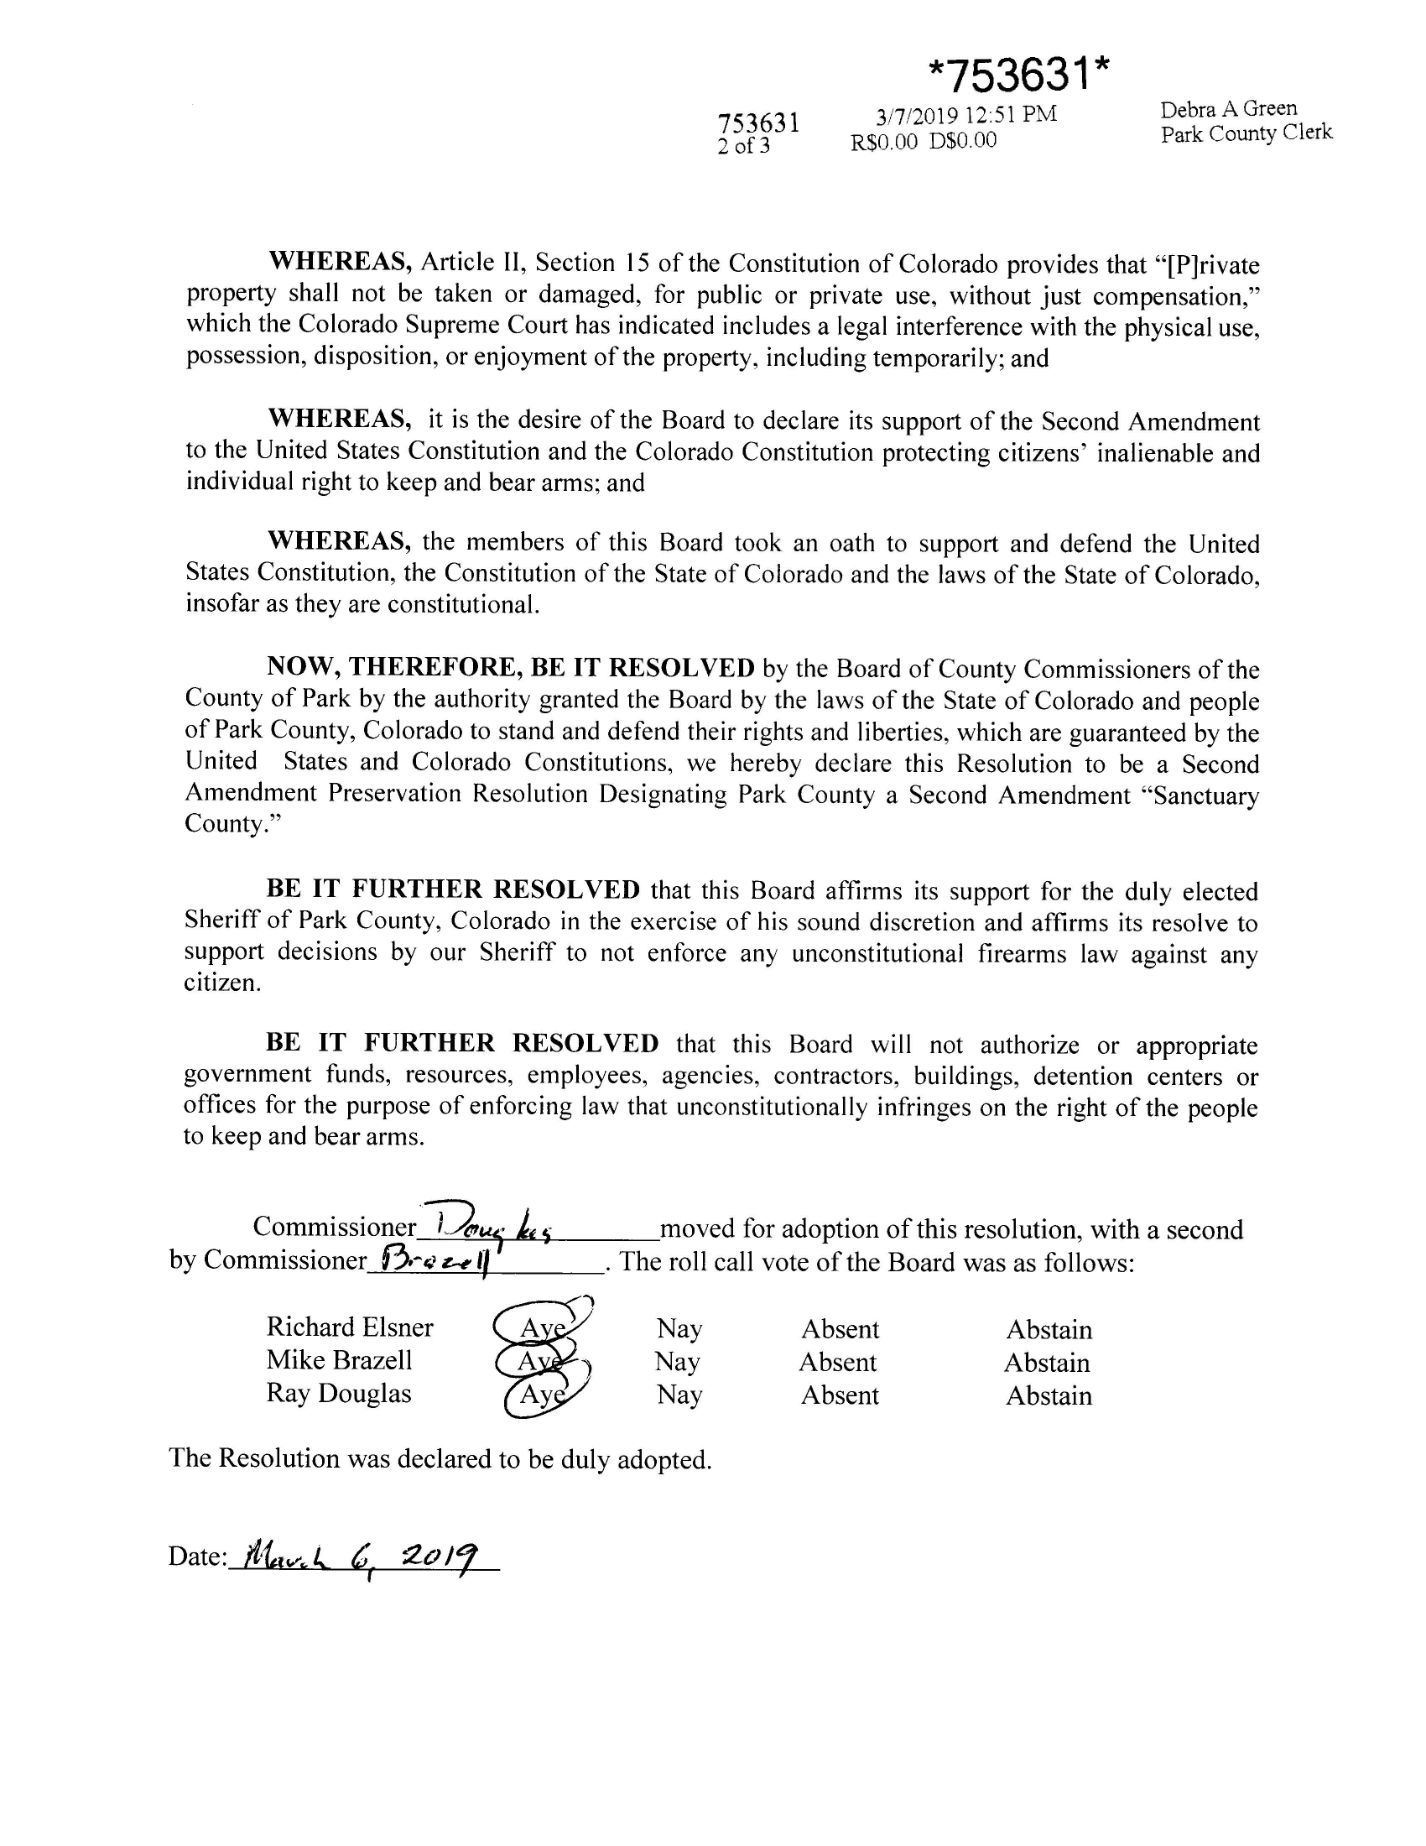 19-15 Declaring Park County Second Amendment Sanctuary County_Page_2